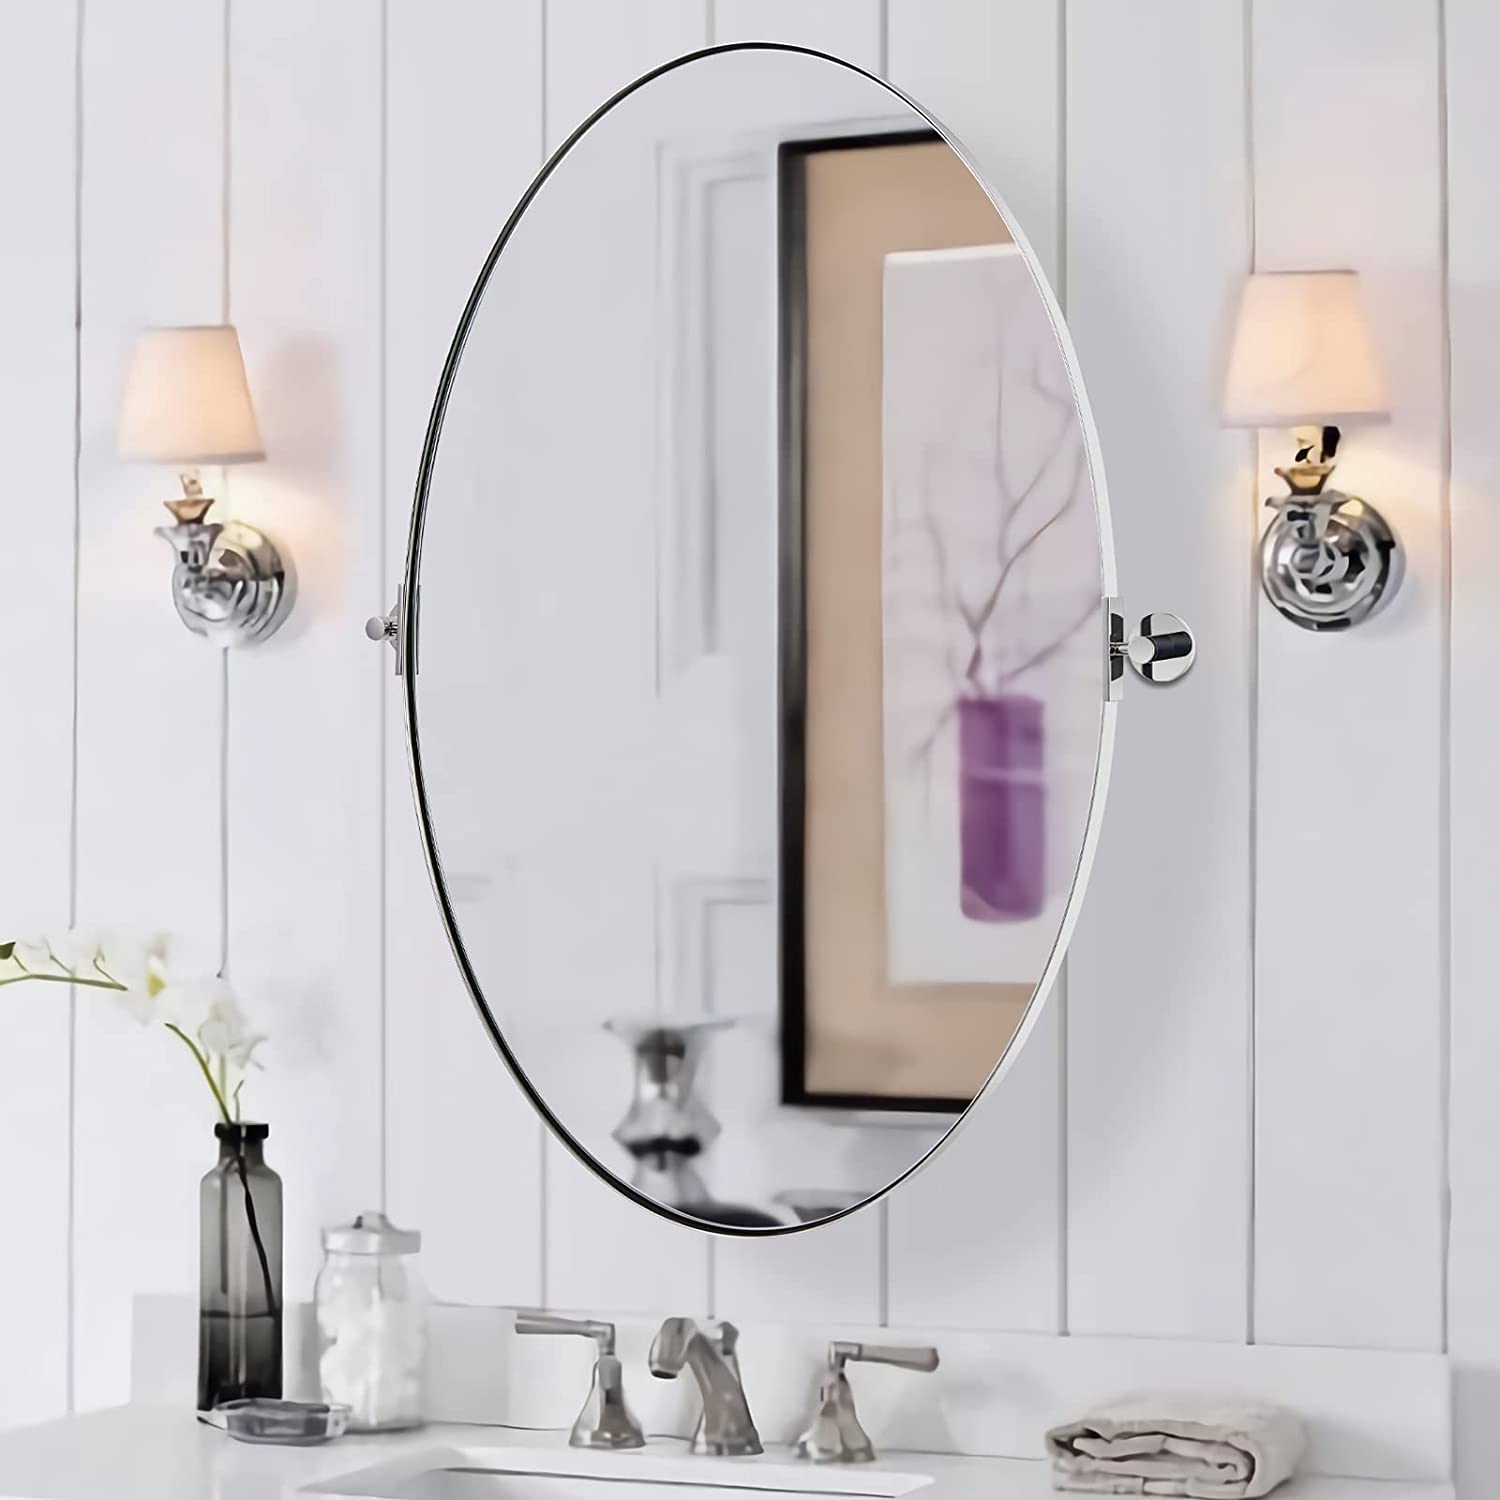 Modern Oval Pivot Mirror Adjustable Swivel Tilt Bathroom Oval Wall Mirror Stainless Steel Frame#color_polished chrome